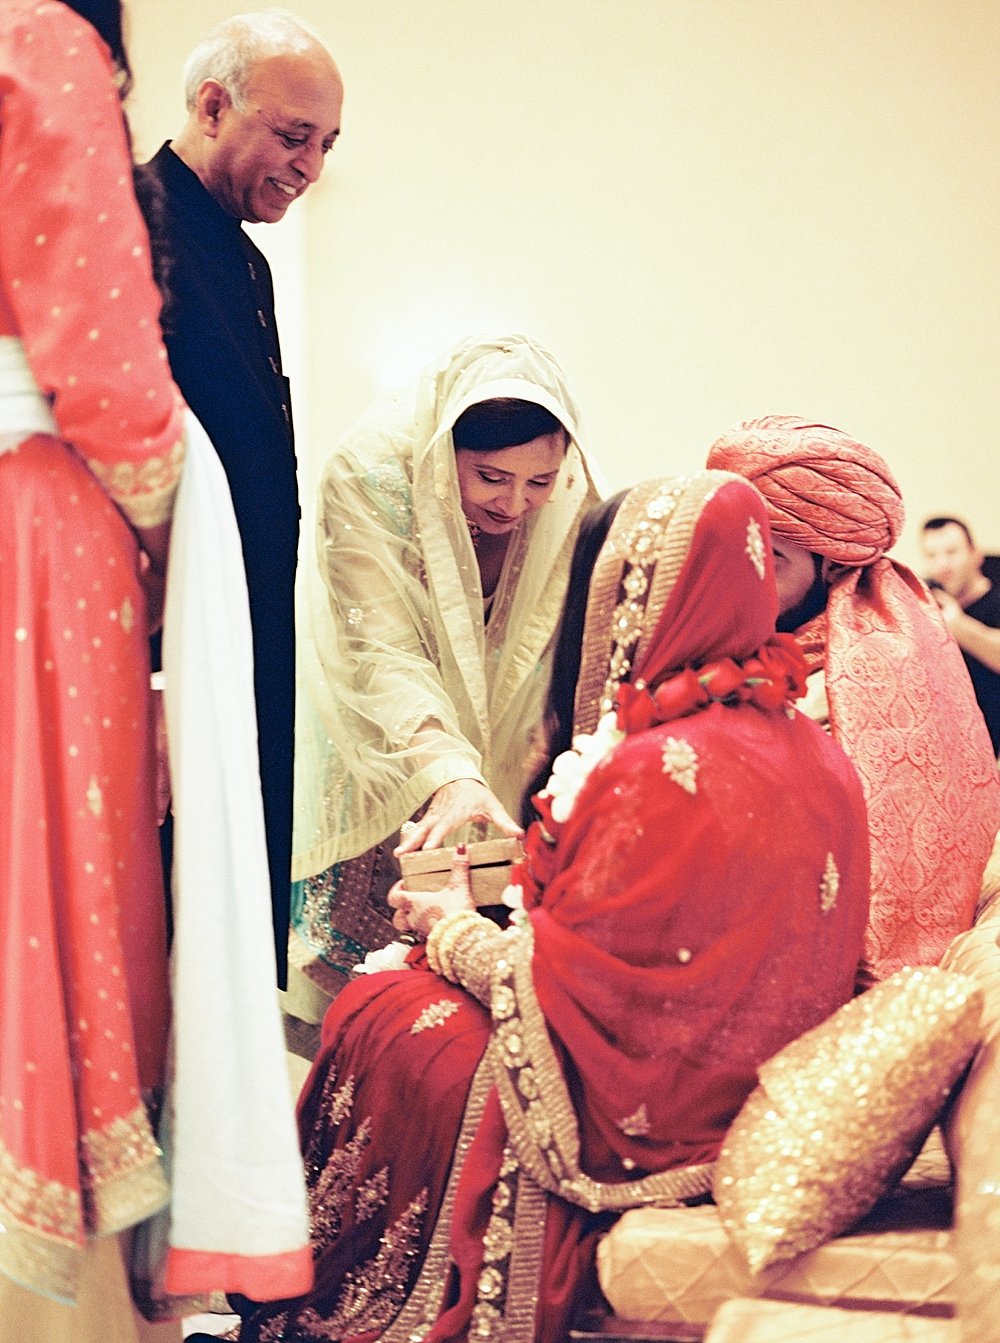  Indian Wedding Hilton Bonnet Creek Waldorf Astoria - Florida Wedding - Timeless Photography | Ashley Holstein  #indianwedding #weddingceremony